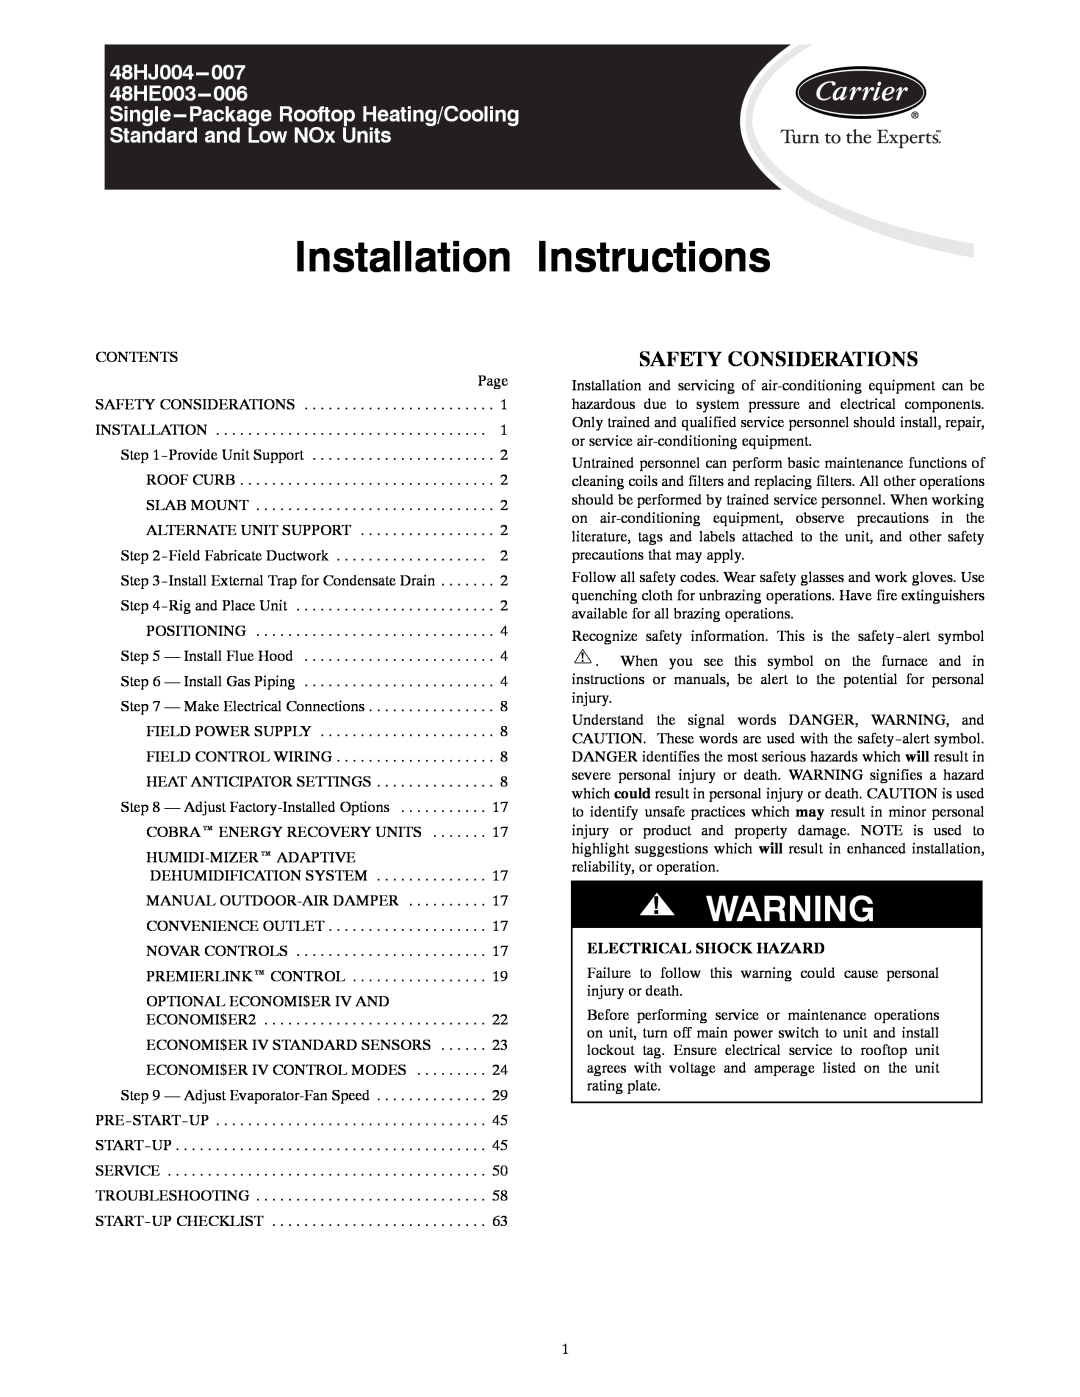 Carrier 48HJ004---007 installation instructions Safety Considerations, Installation Instructions, Electrical Shock Hazard 